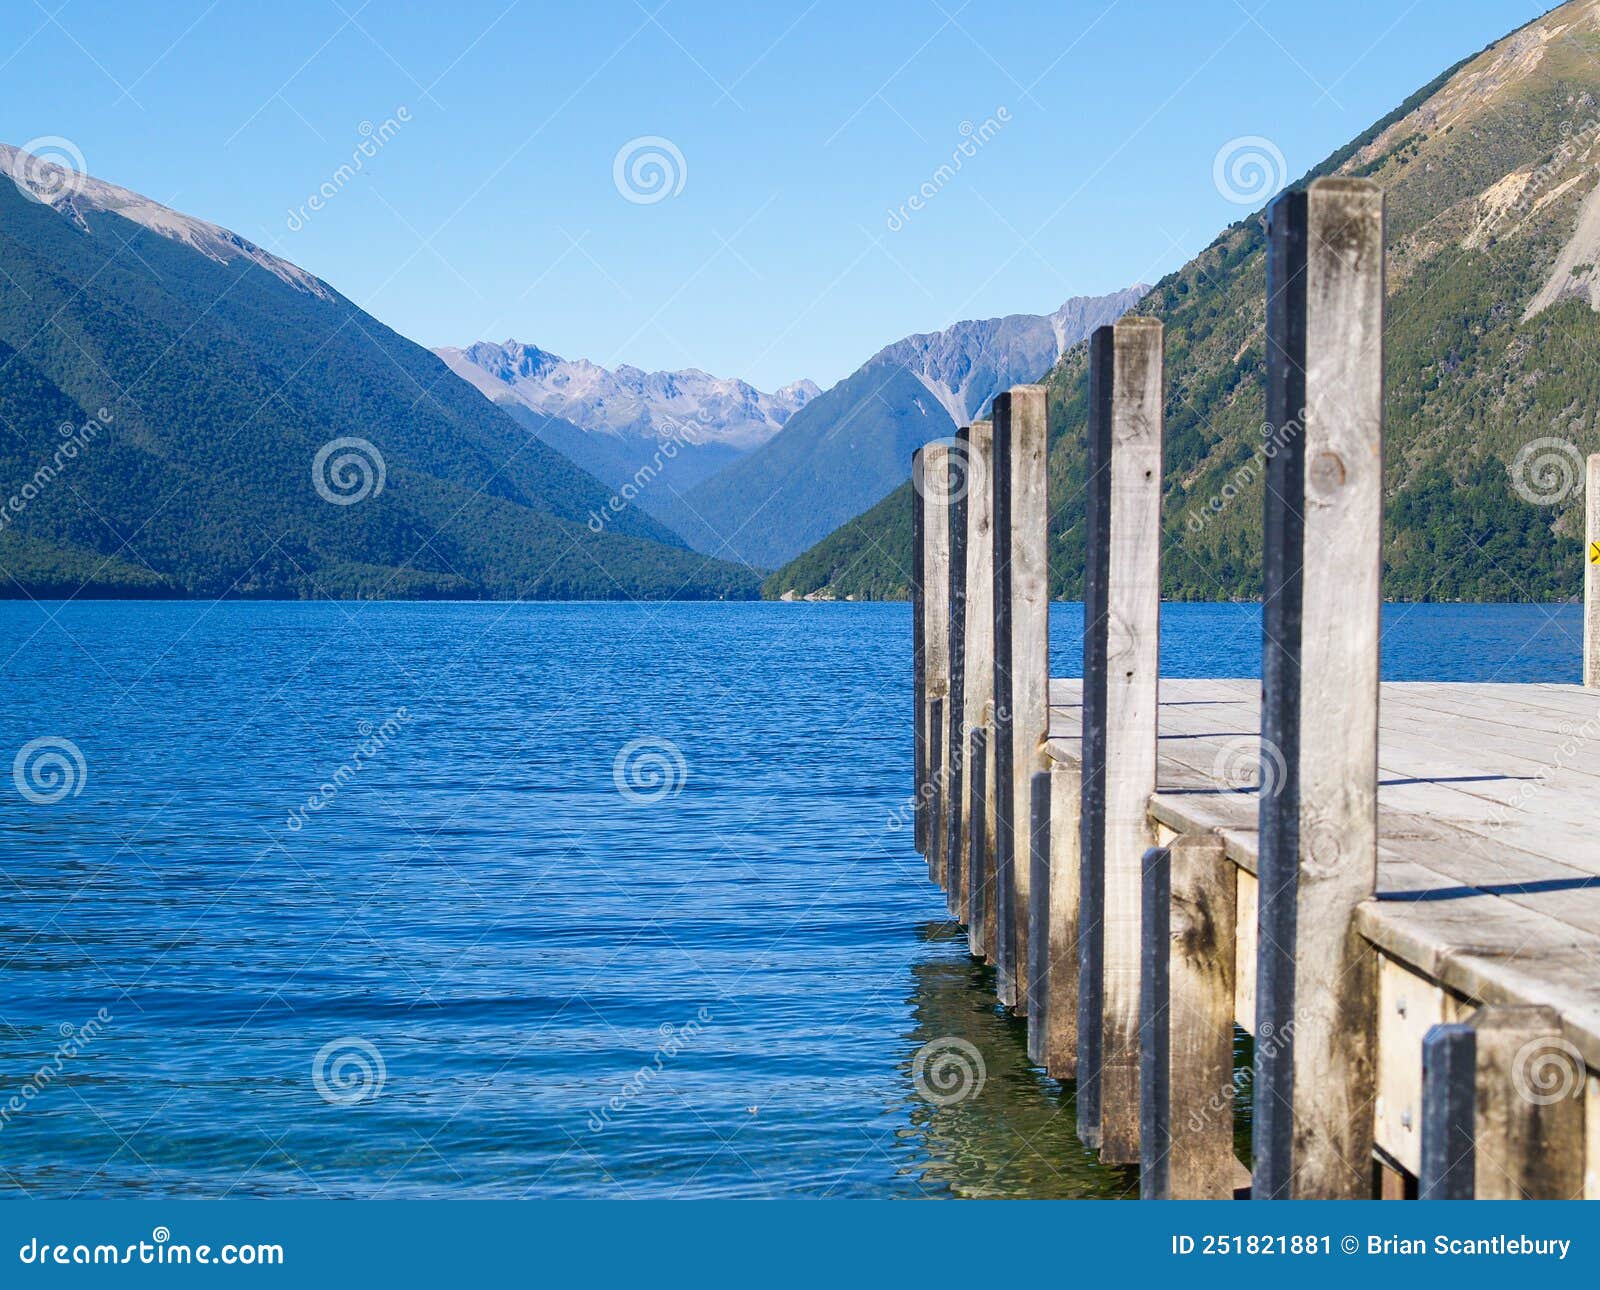 converging mountain ridges beyond stunning blue water and jetty on lake roto-iti